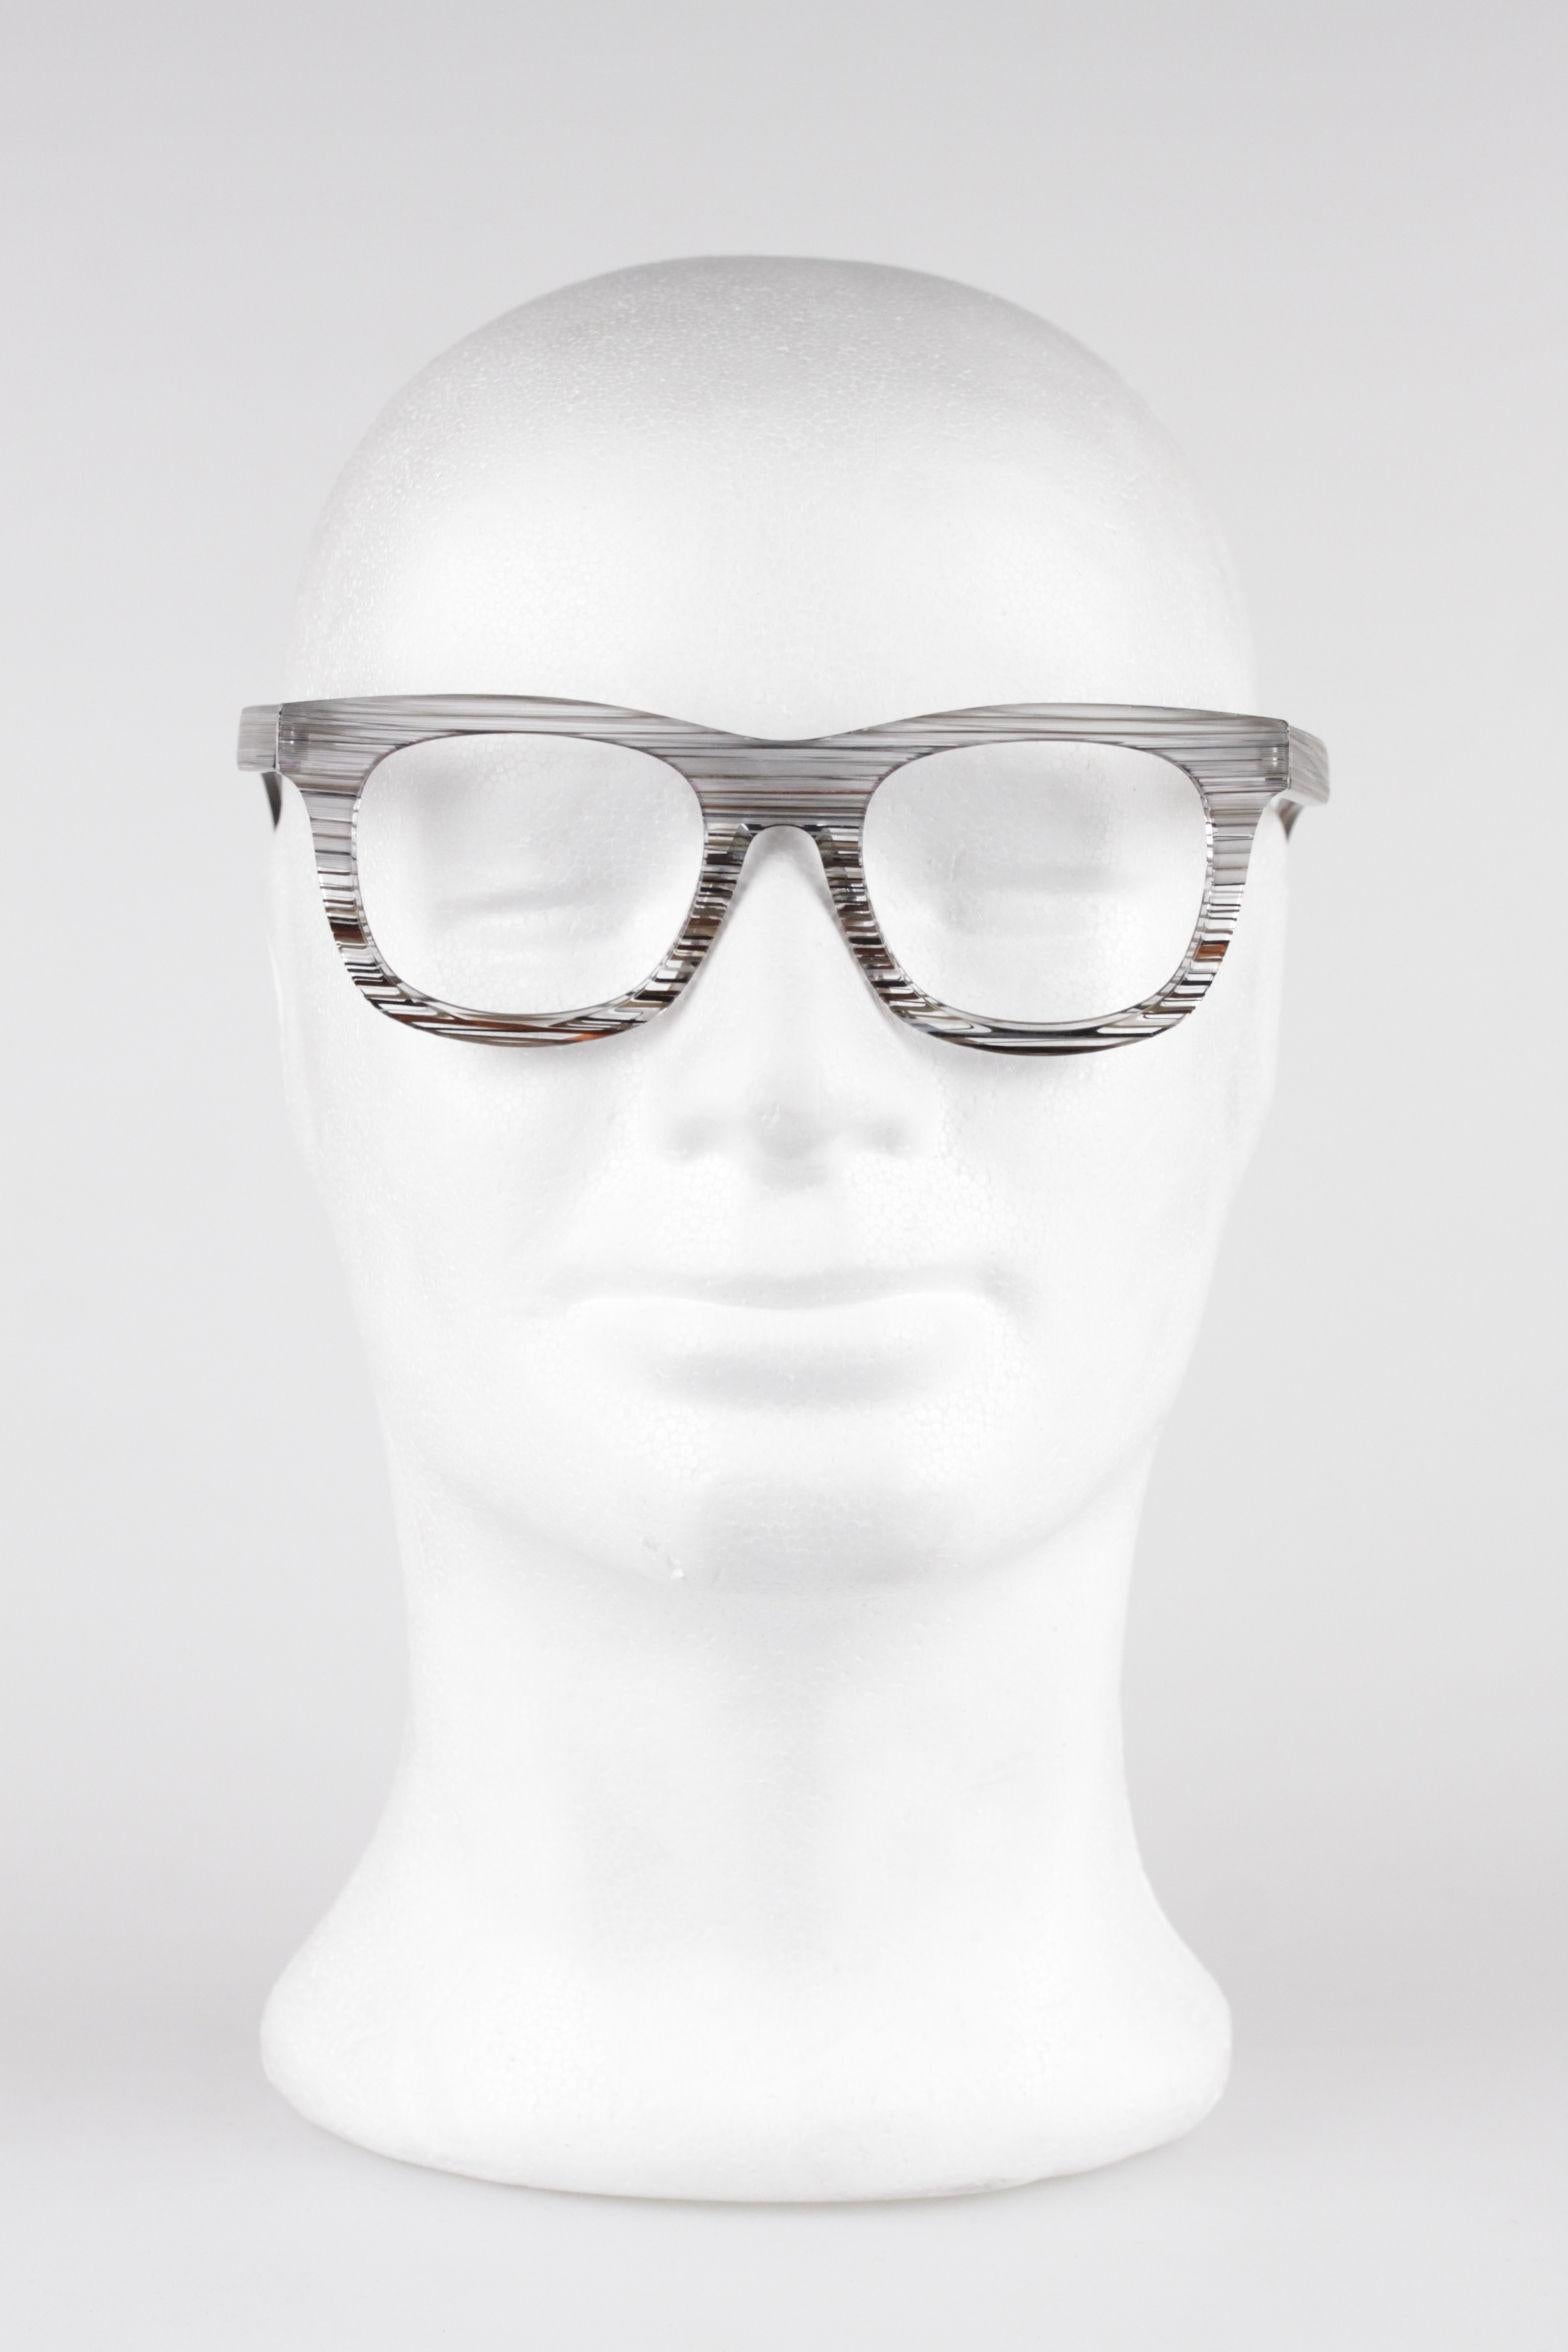 Gray Alain Mikli Eyeglasses Striped Pattern Mod. A01348 54mm Never Worn